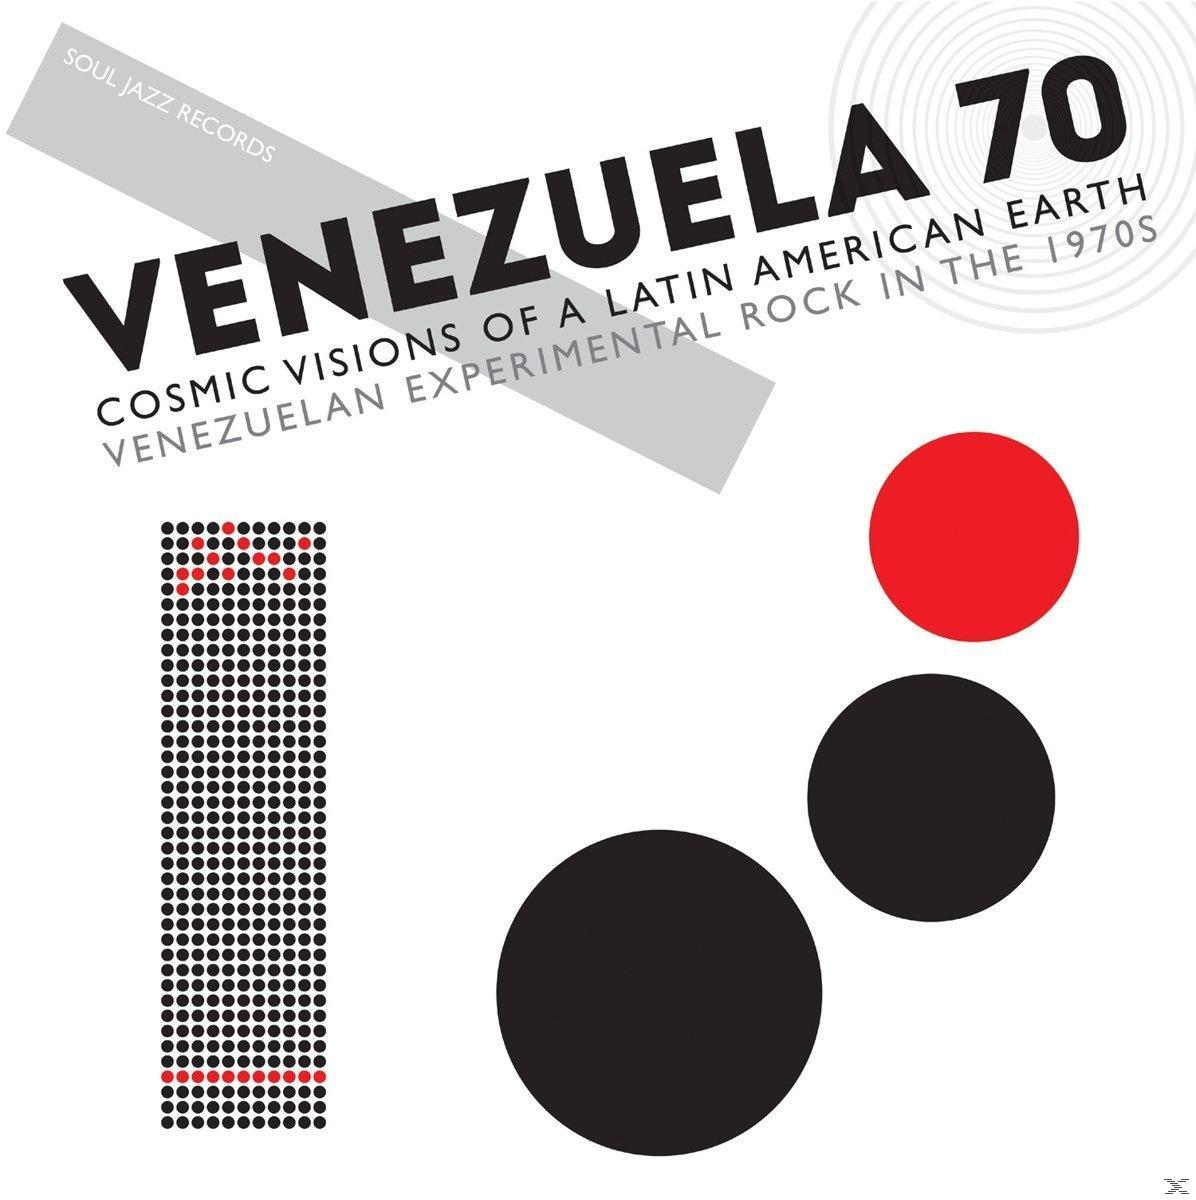 VARIOUS (CD) - 70 Venezuela -